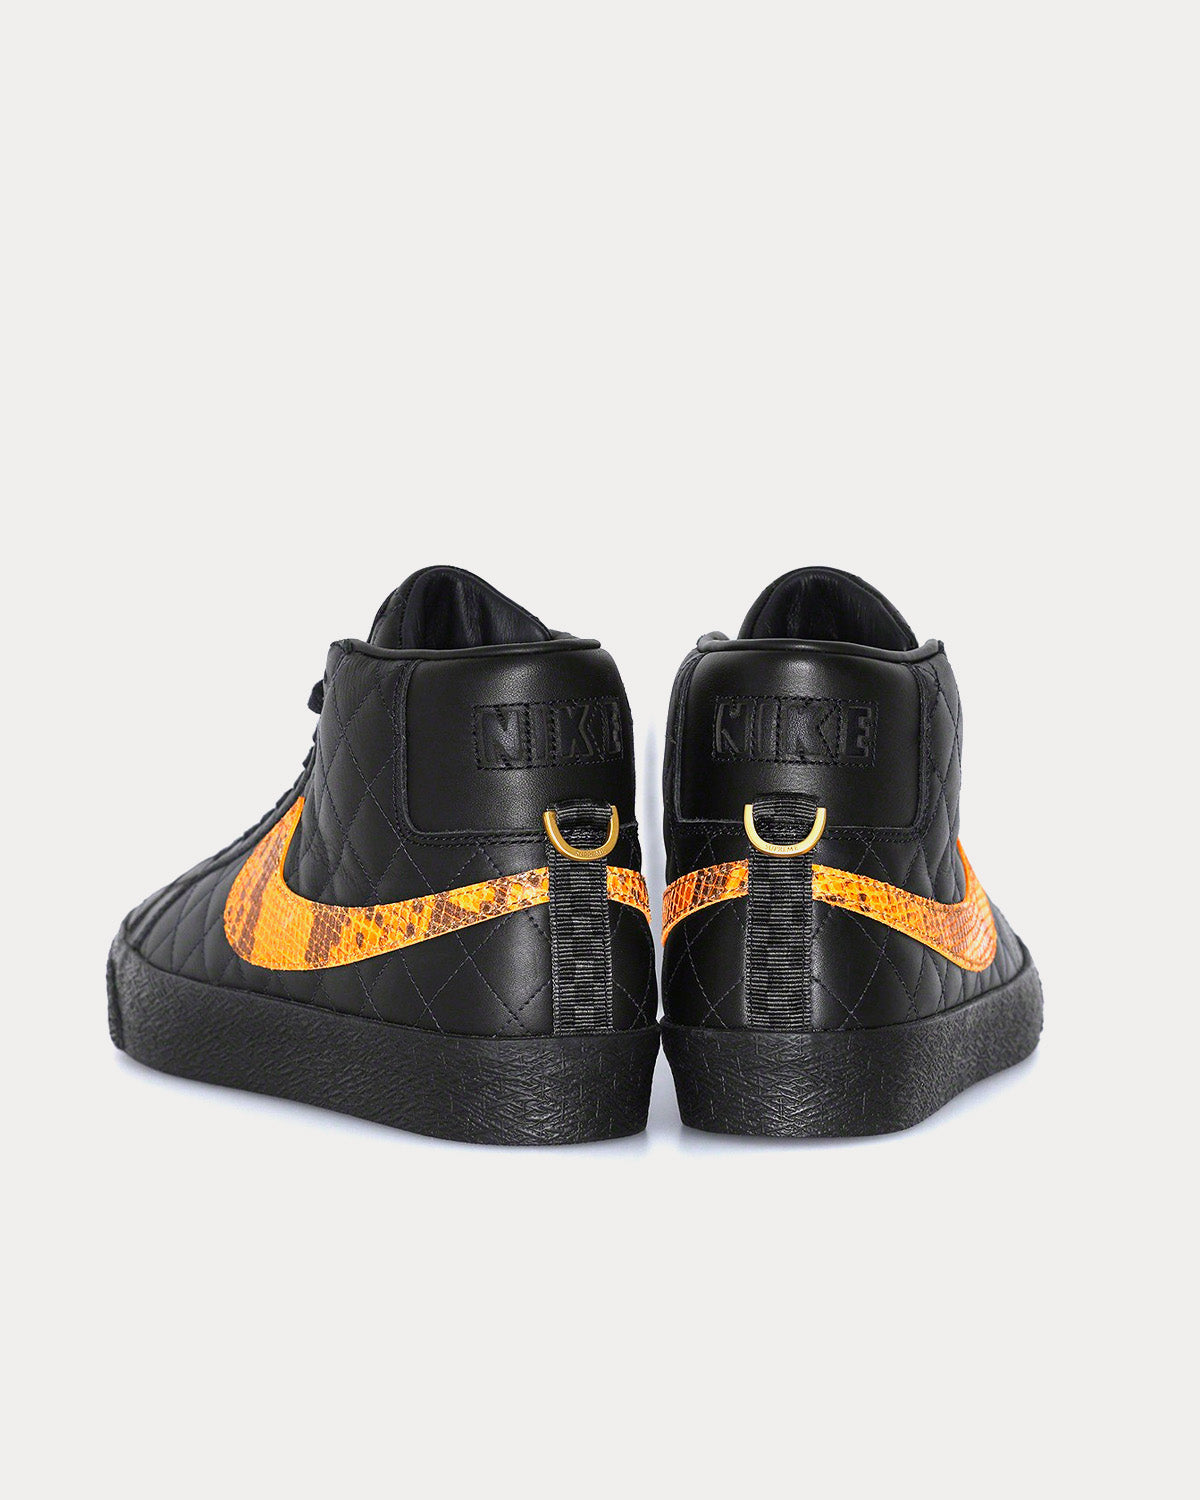 Nike x Supreme - SB Blazer Mid Black High Top Sneakers